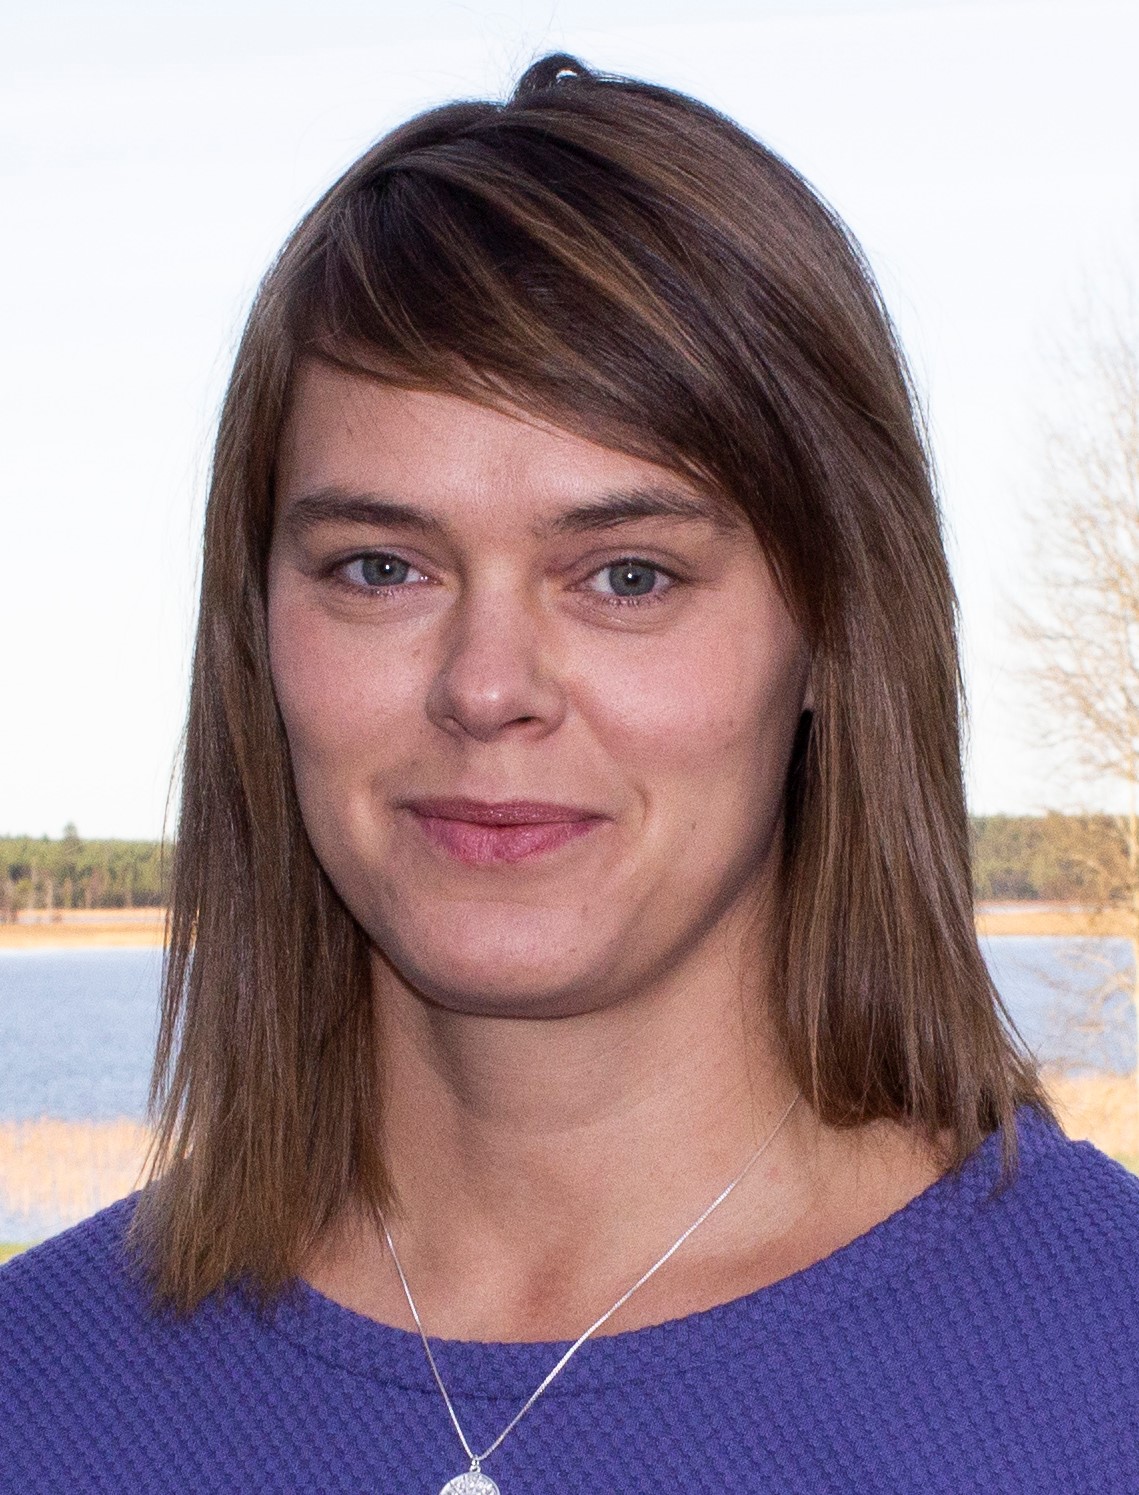 Anna Israelsson